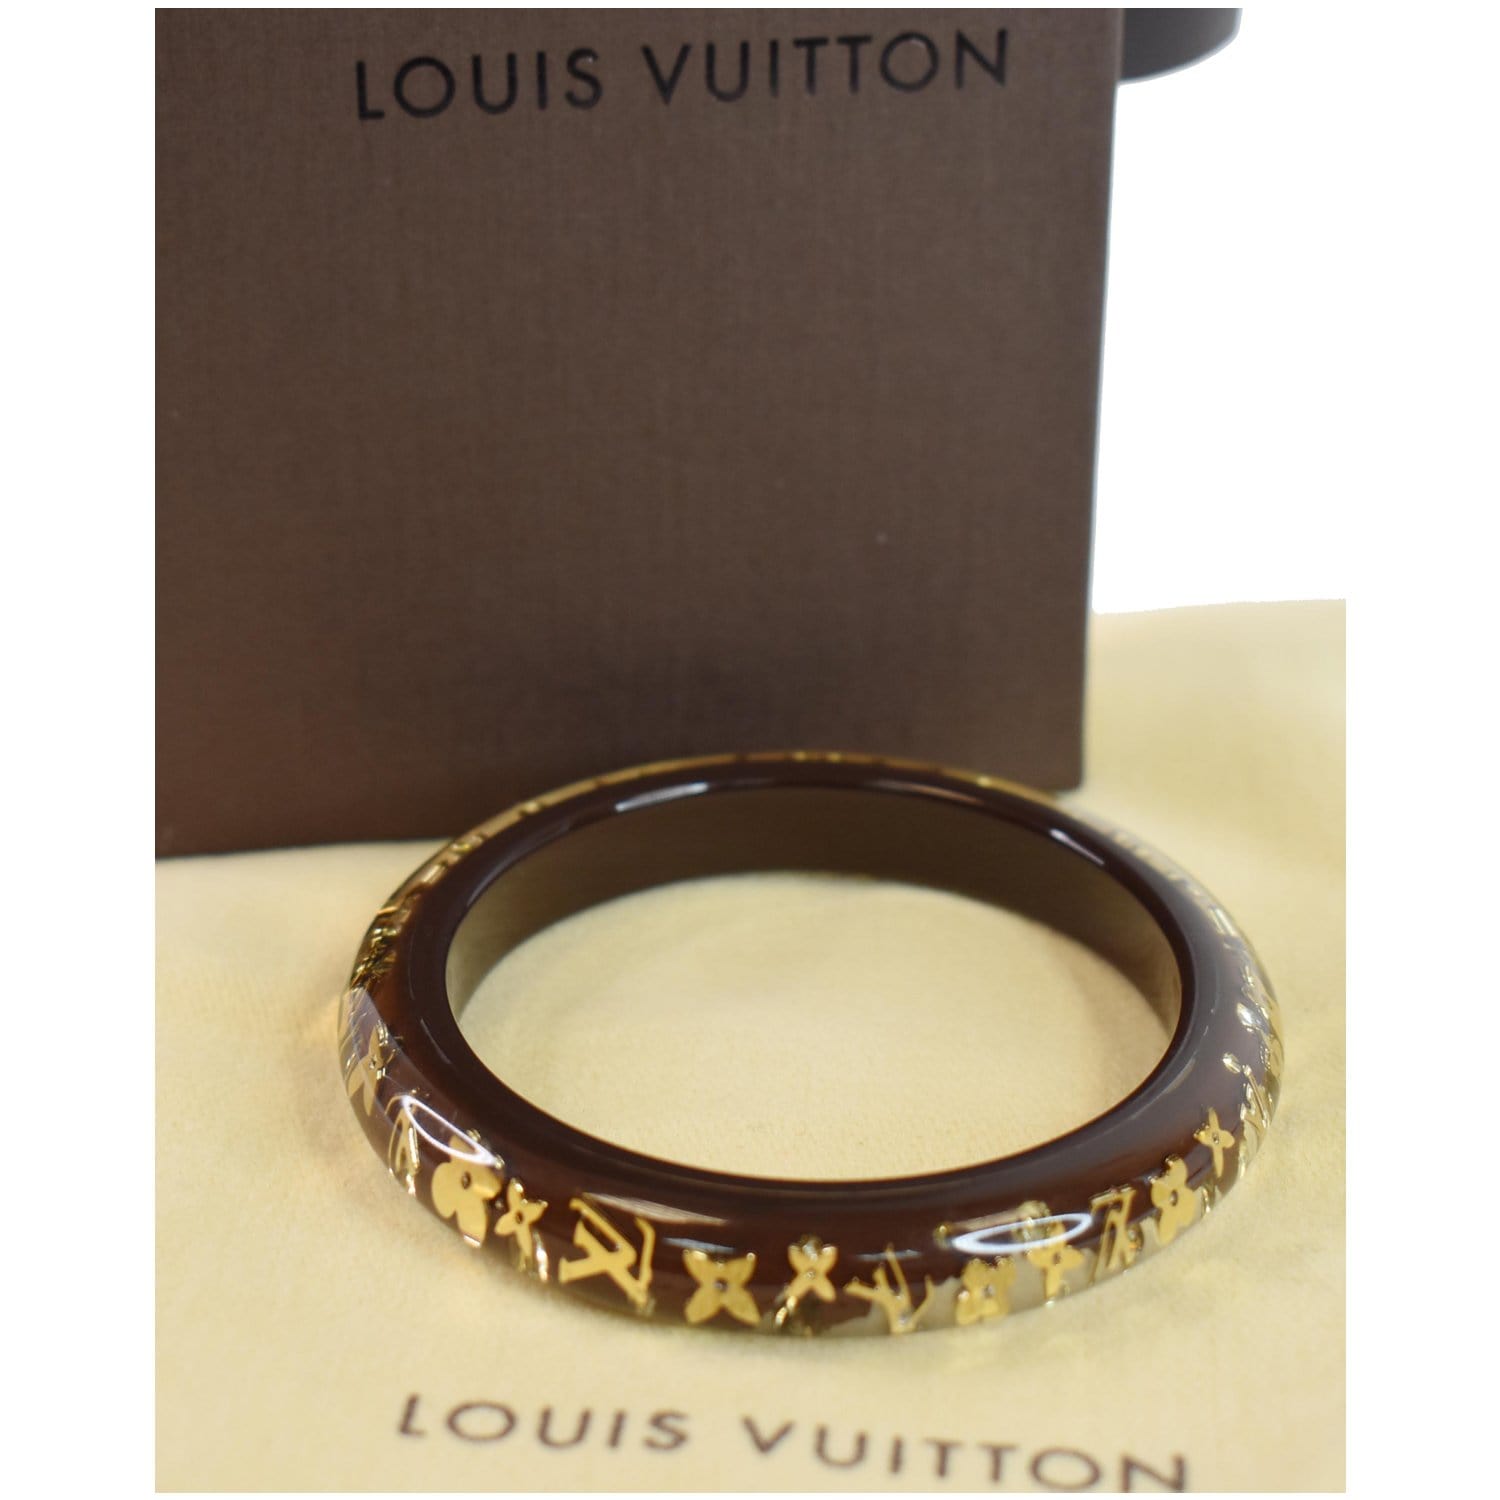 Louis Vuitton - Authenticated Inclusion Bracelet - Plastic Brown for Women, Very Good Condition